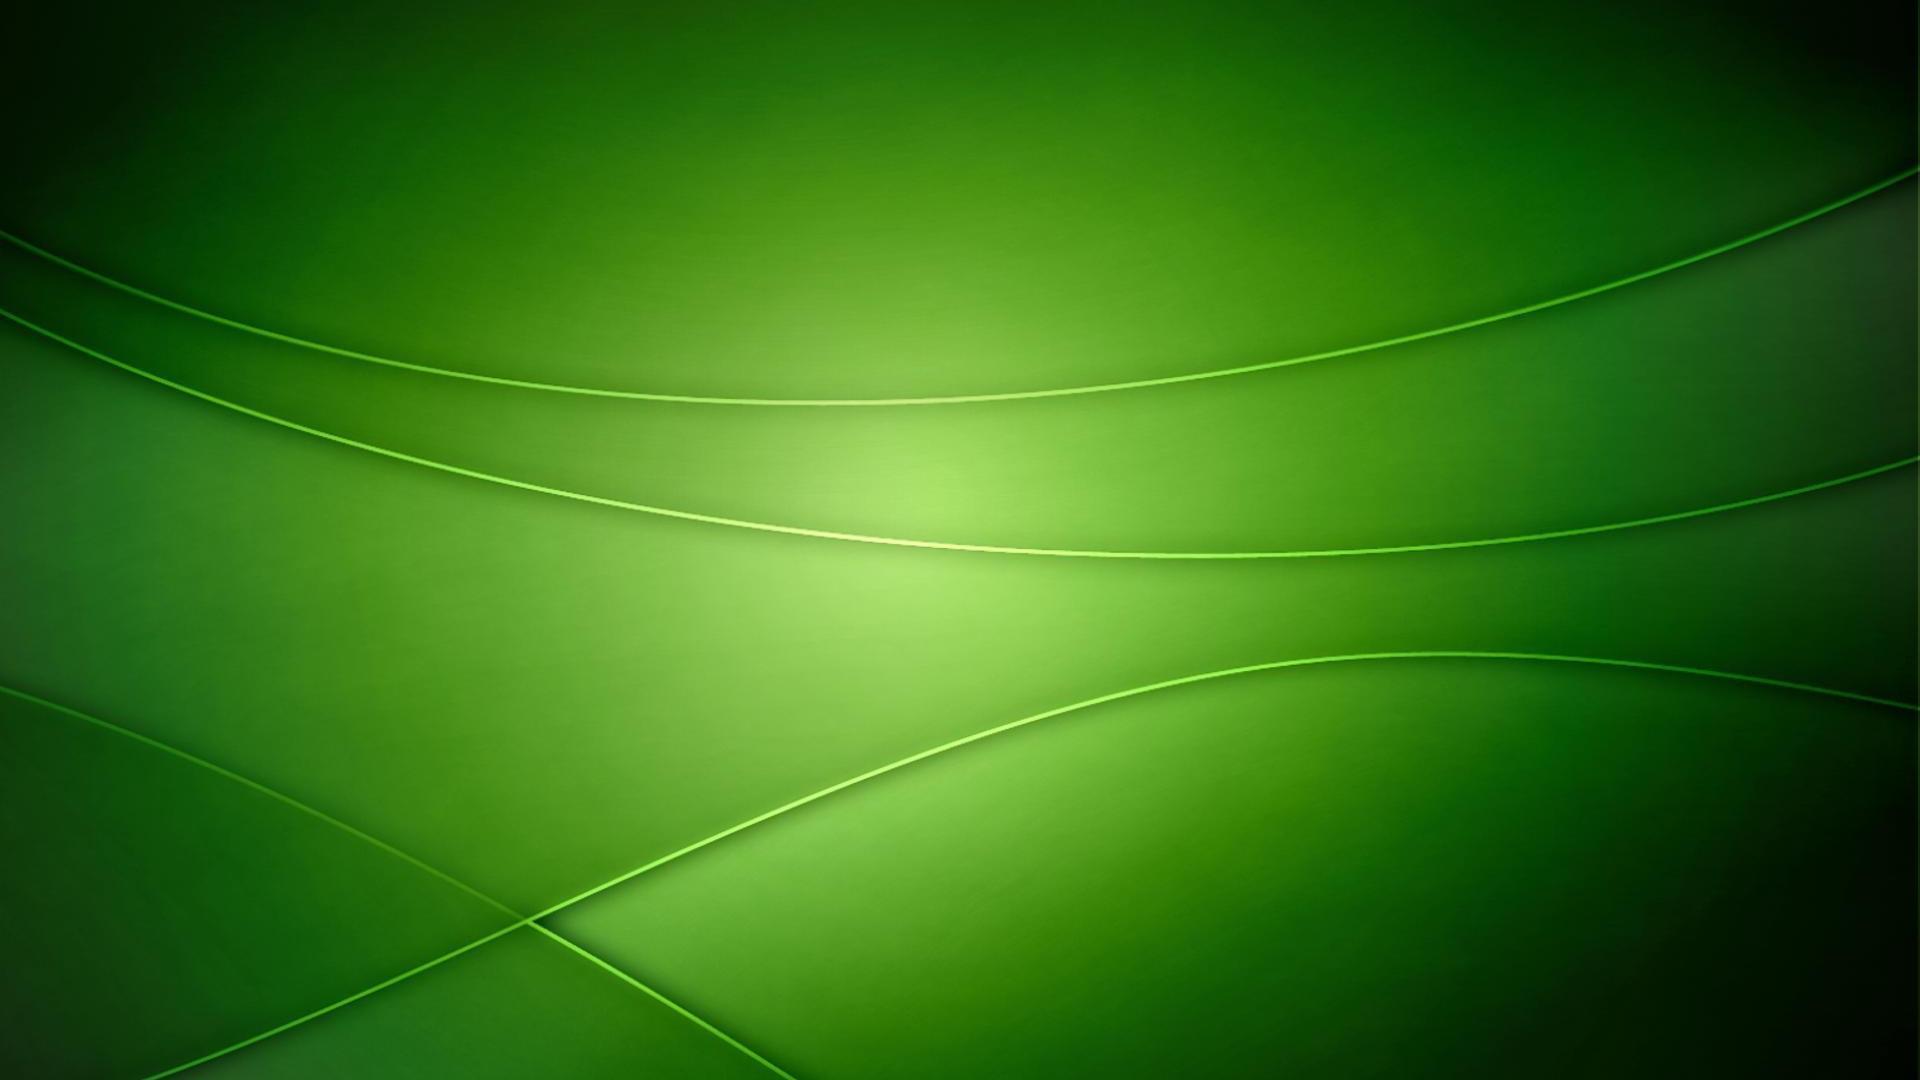 Green Desktop Wallpaper and Background